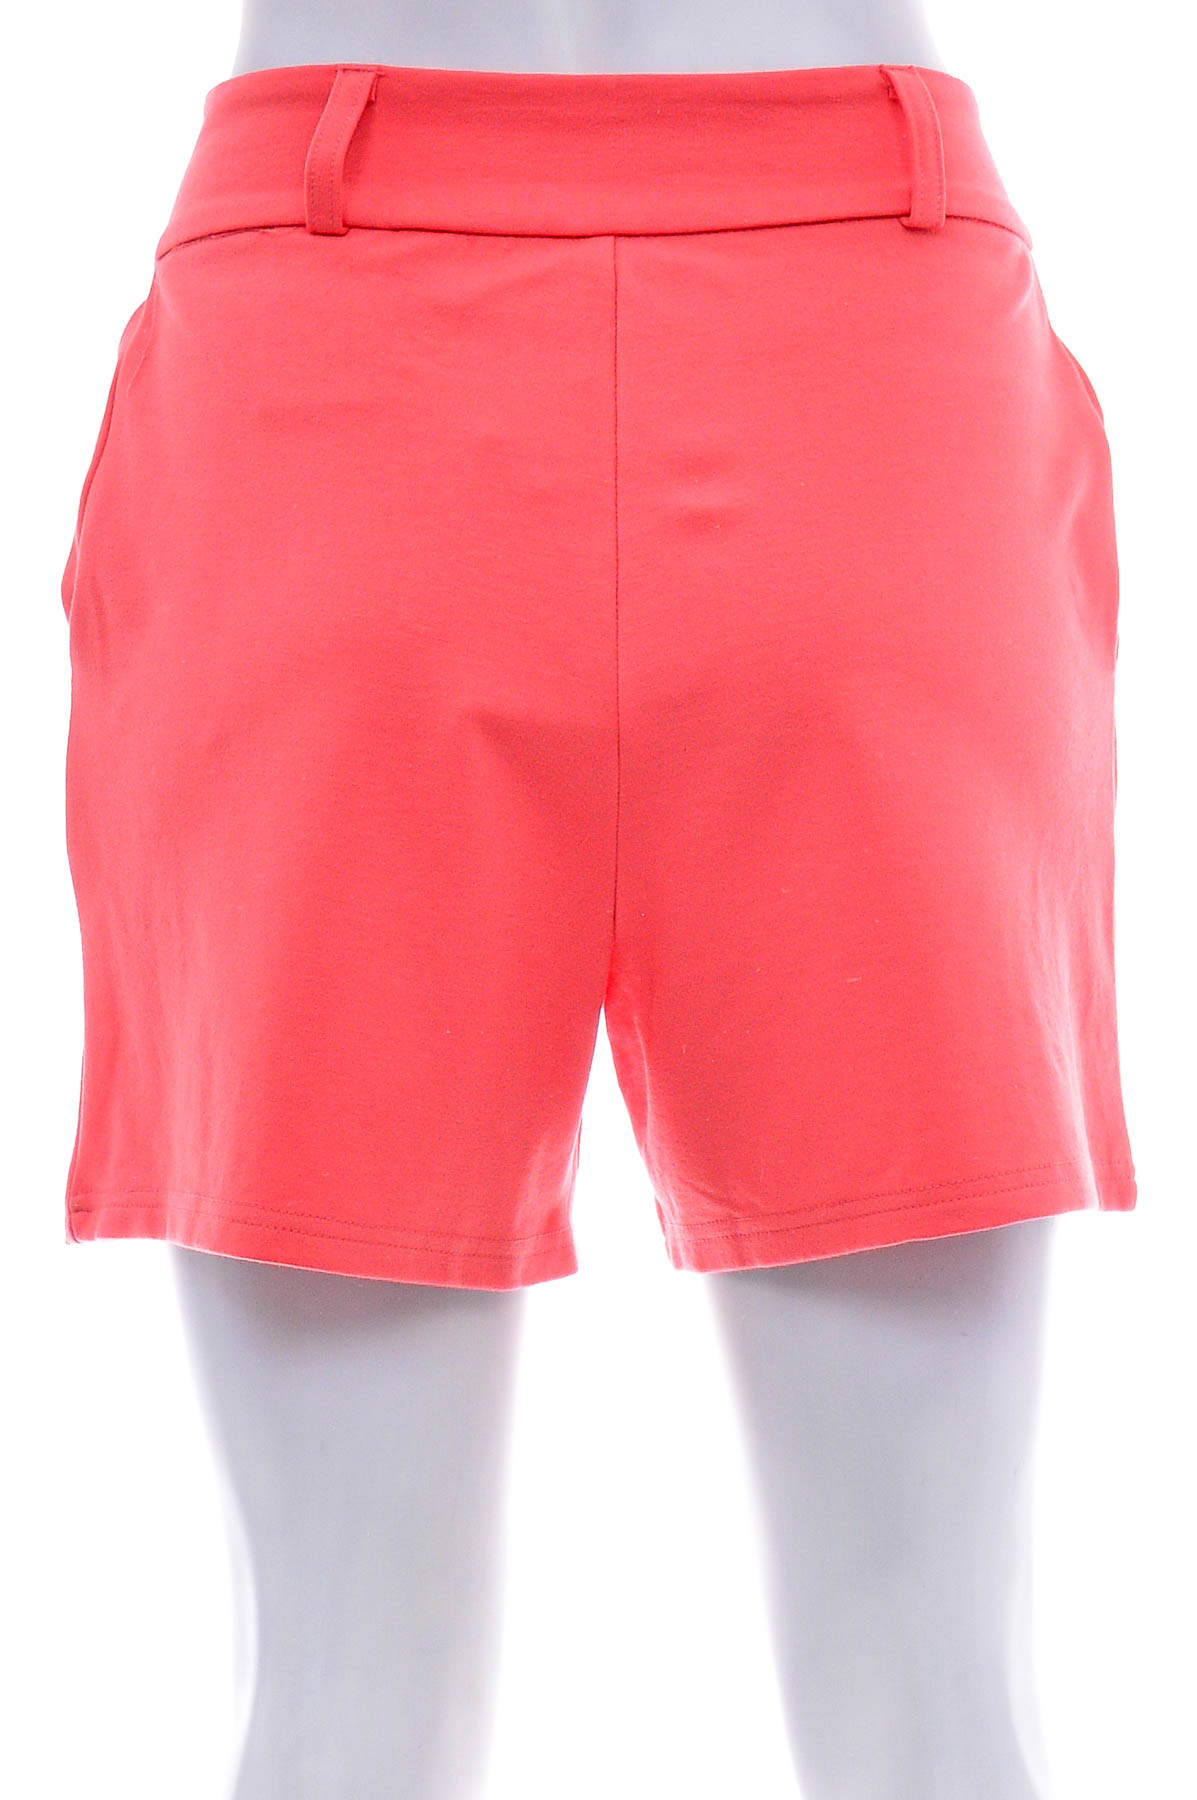 Female shorts - Ever.me - 1